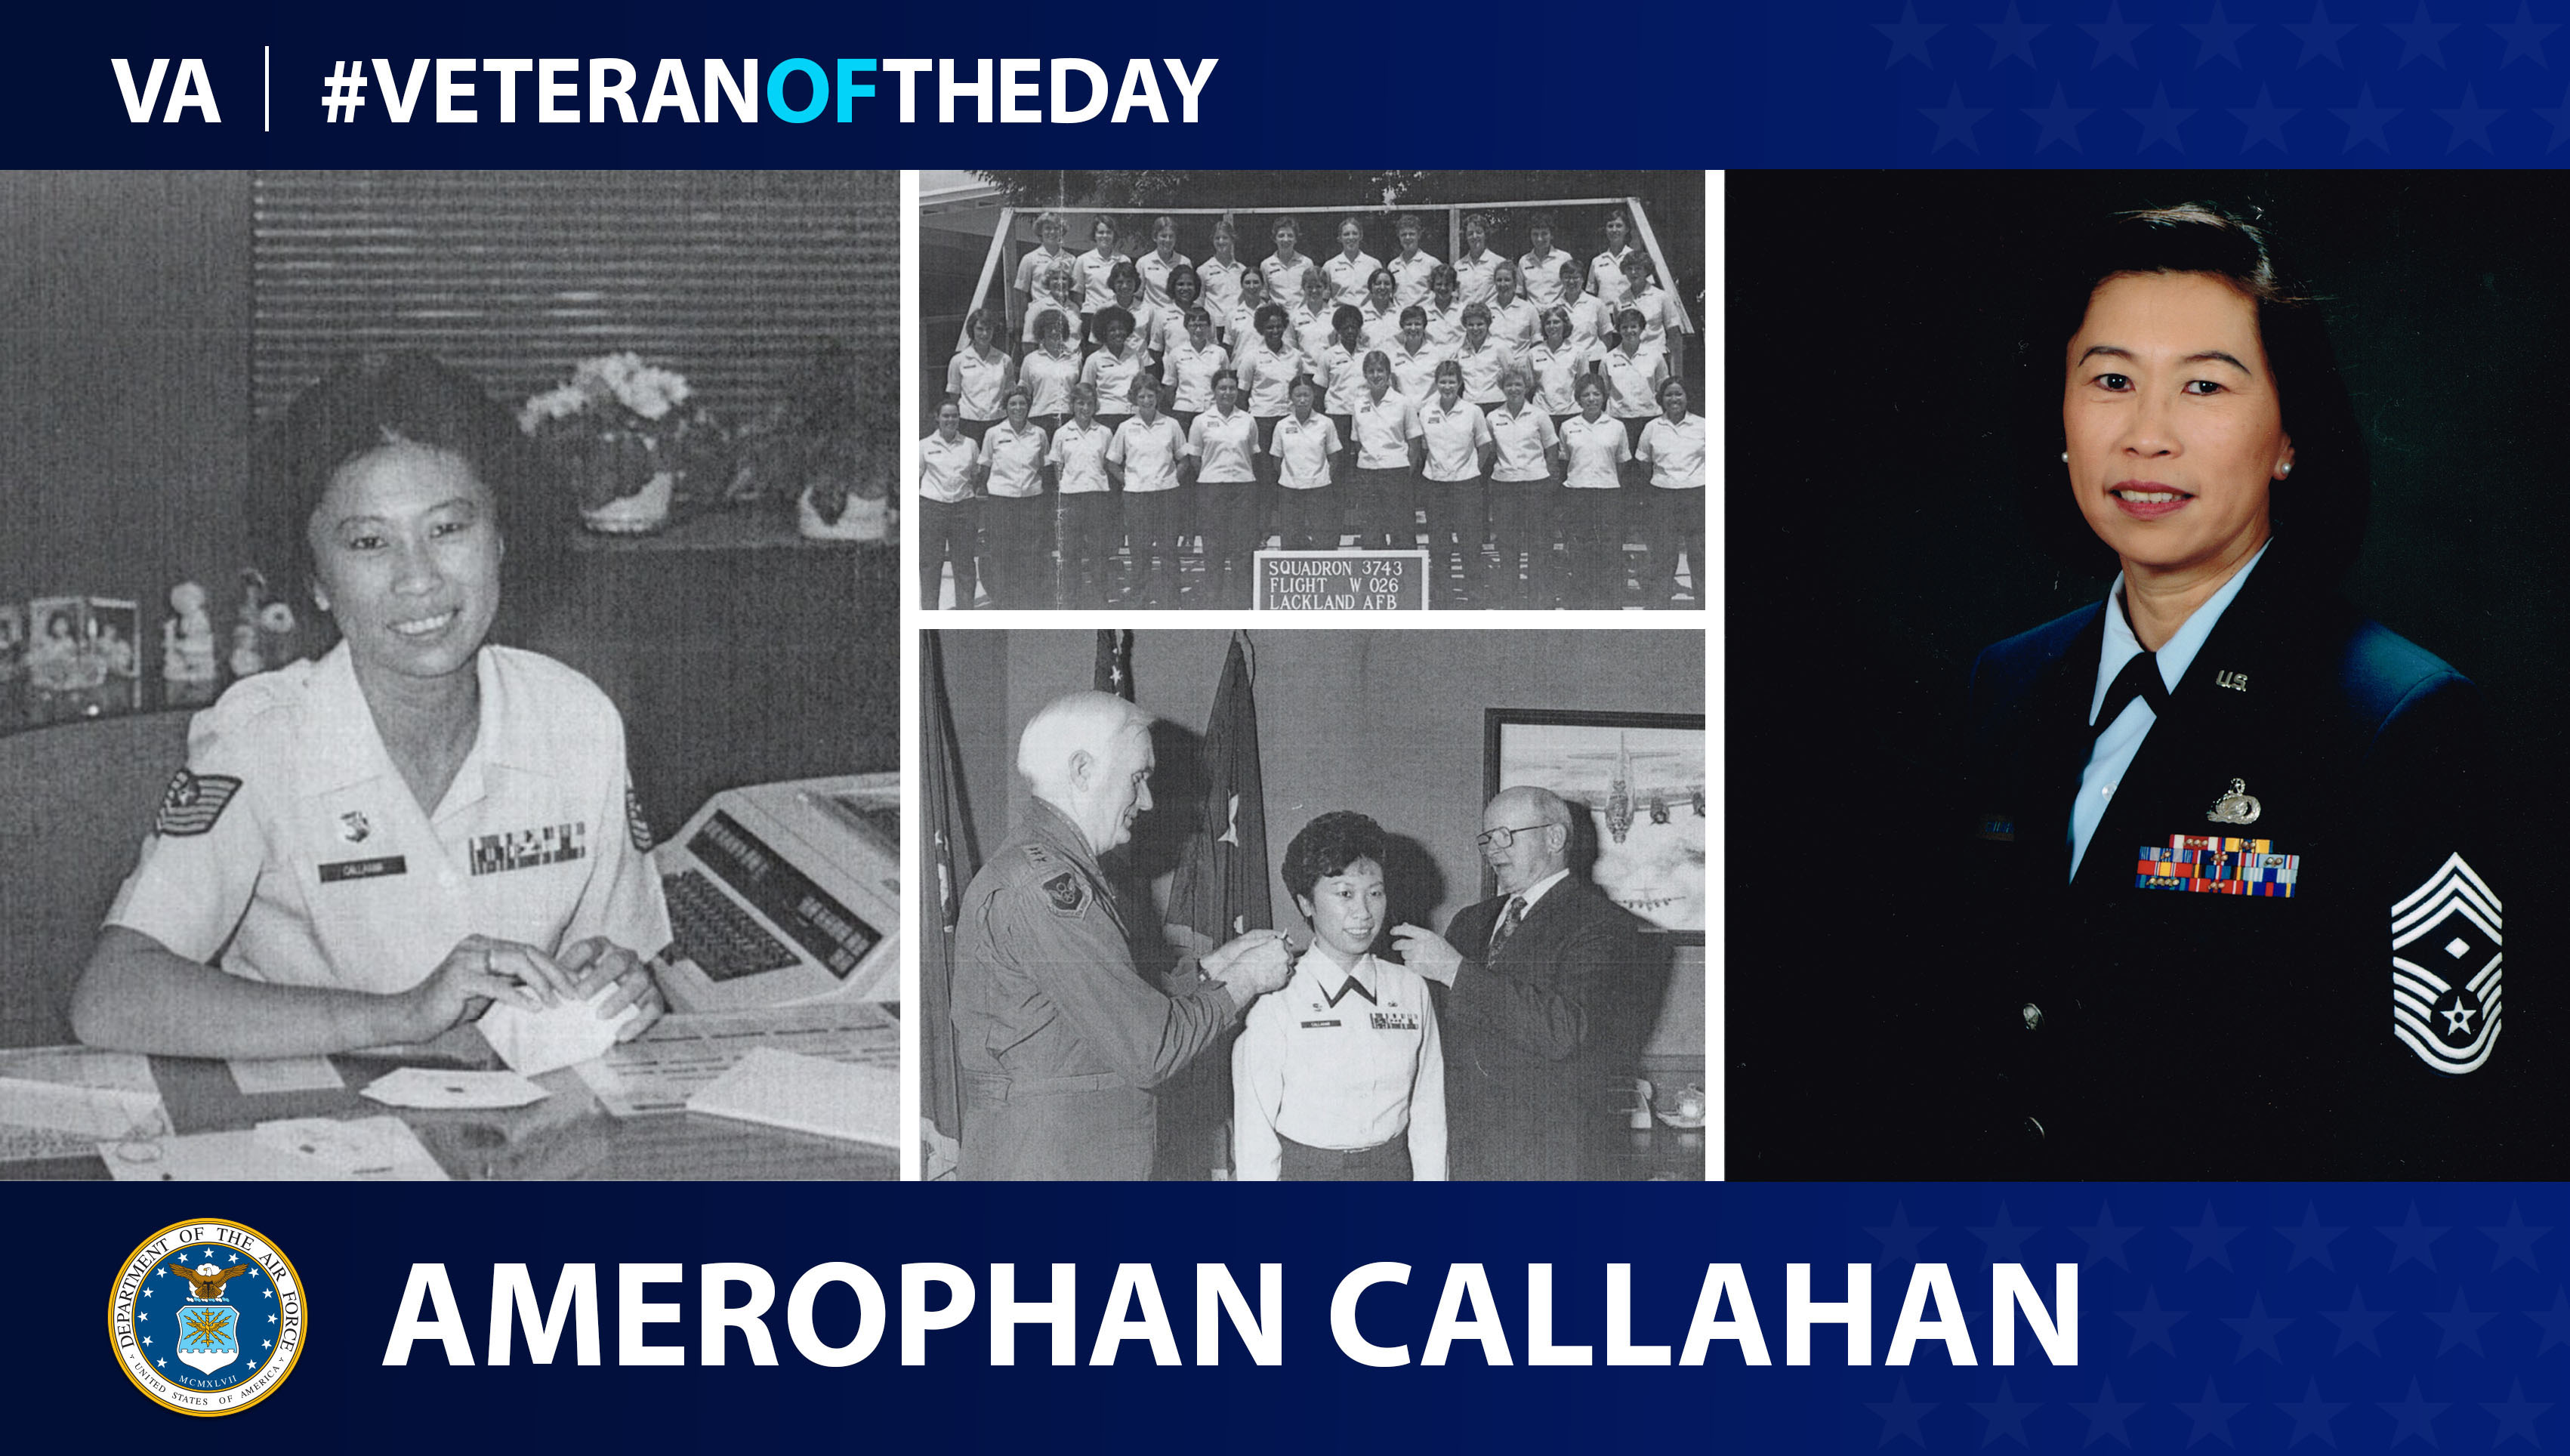 Air Force Veteran Amerophan Callahan is today's Veteran of the Day.